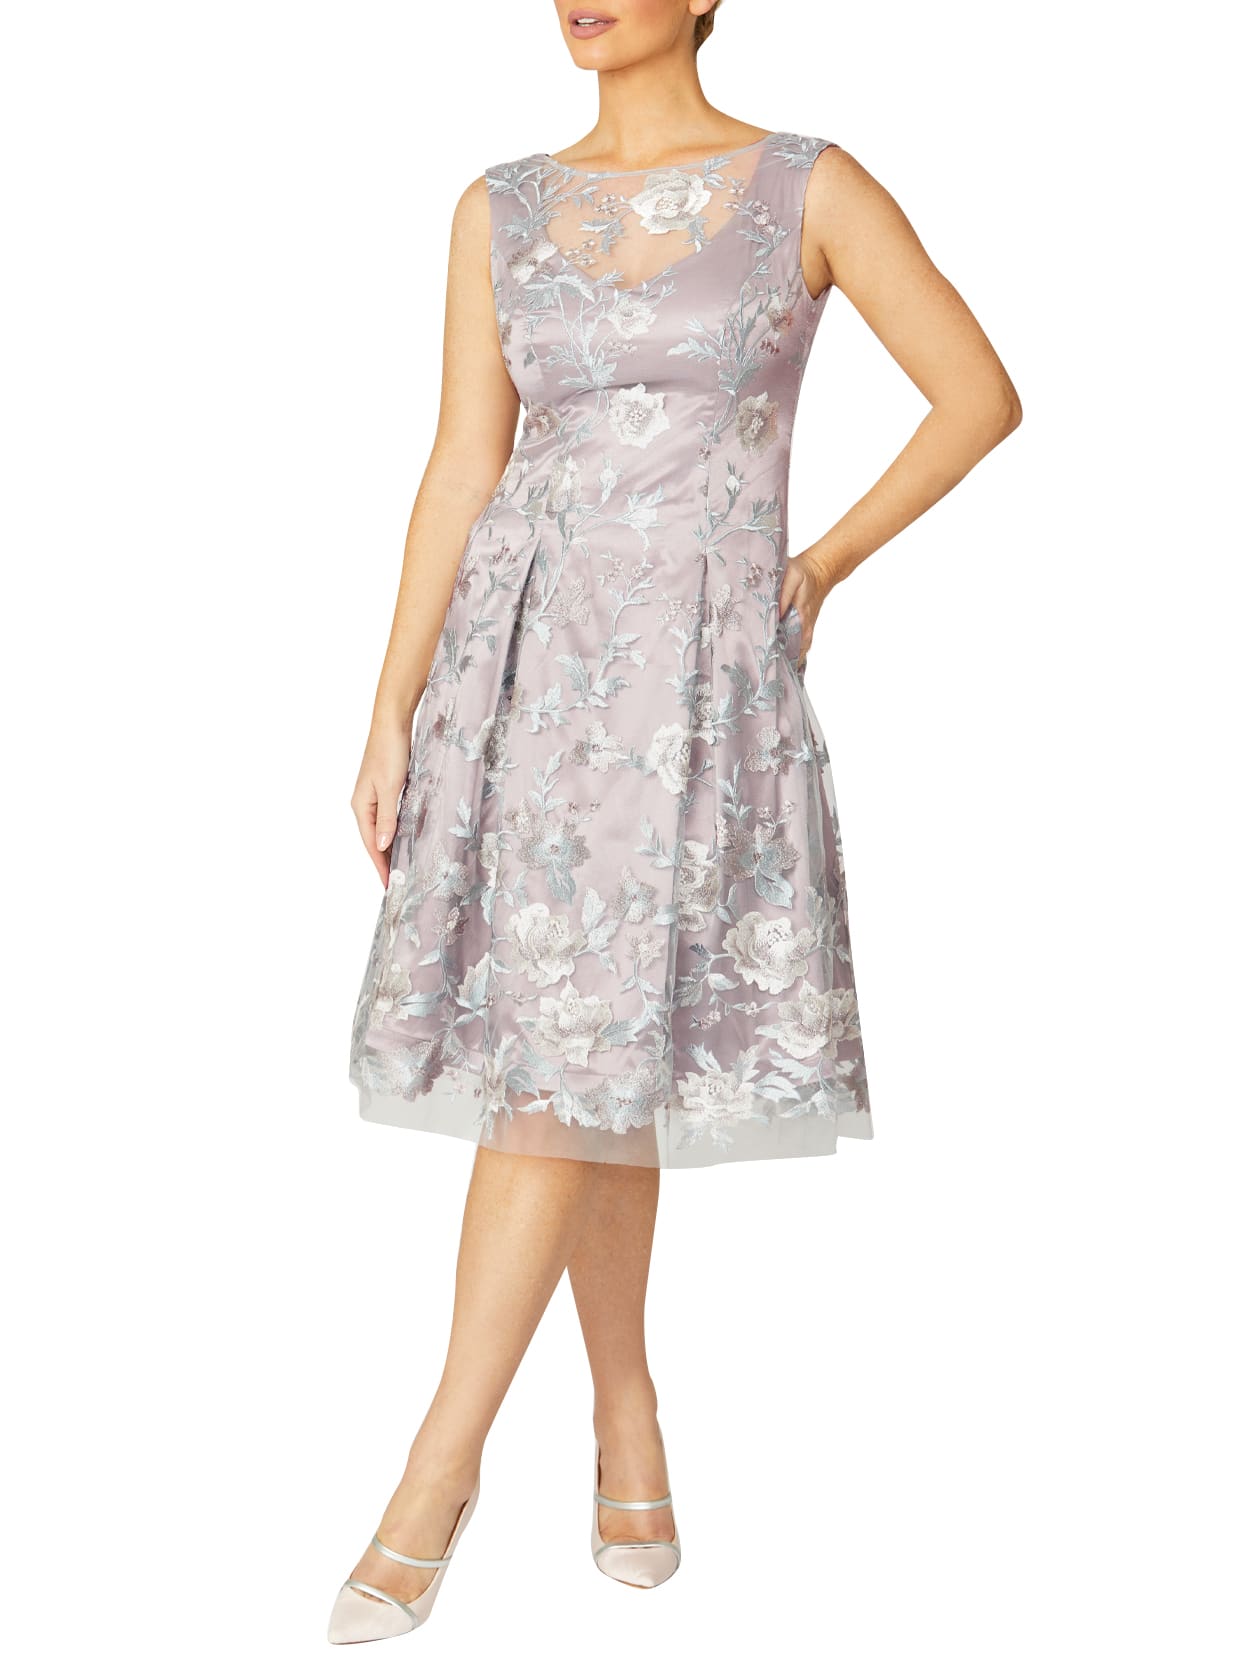 Elegant Embroidered A-Line Dress with Hidden Pockets.JPG